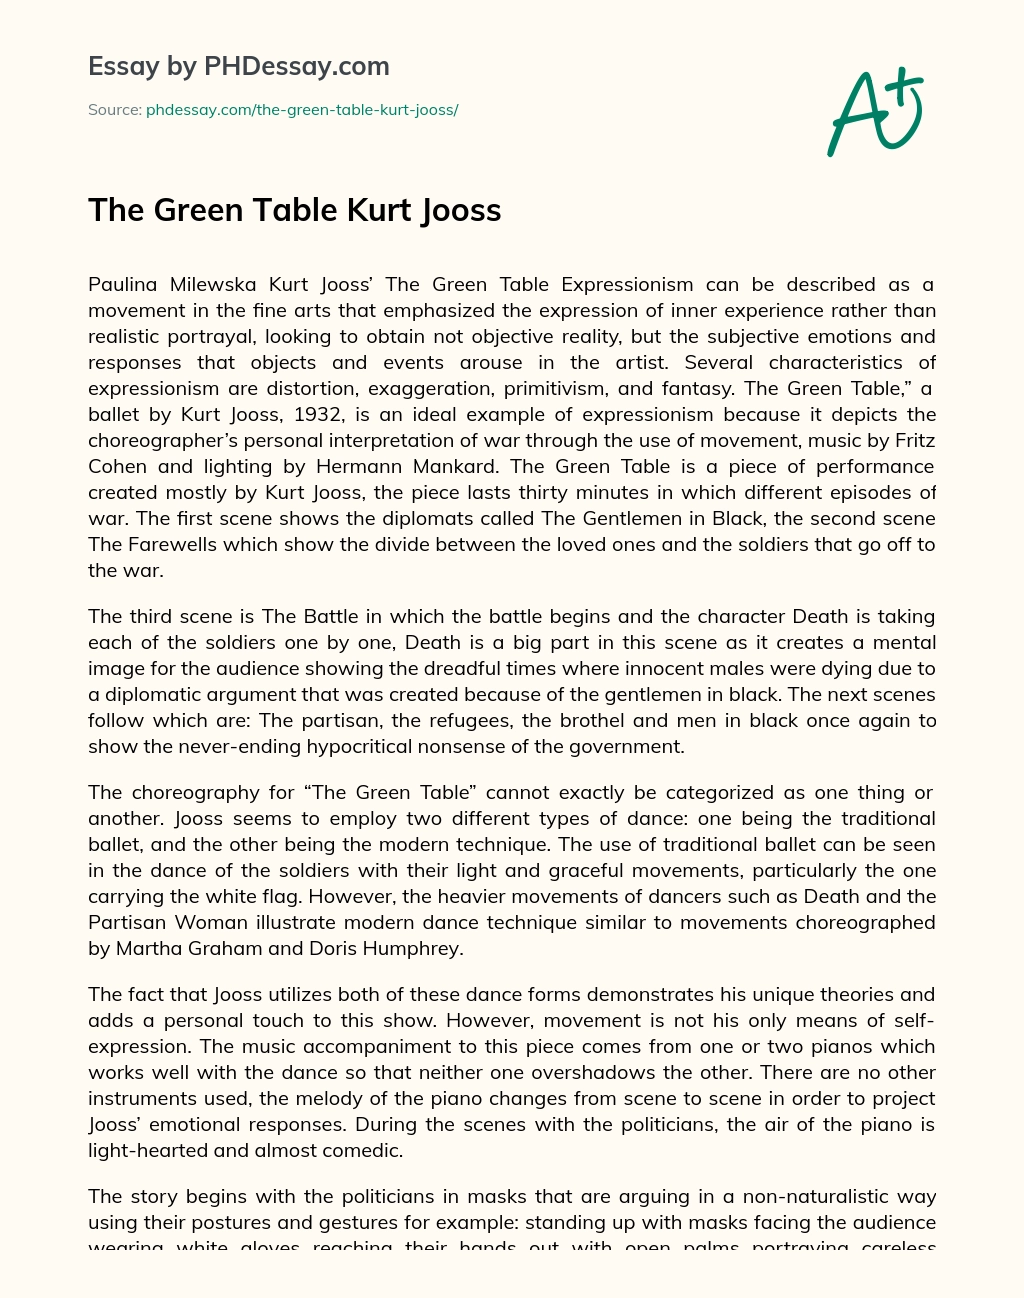 The Green Table Kurt Jooss essay